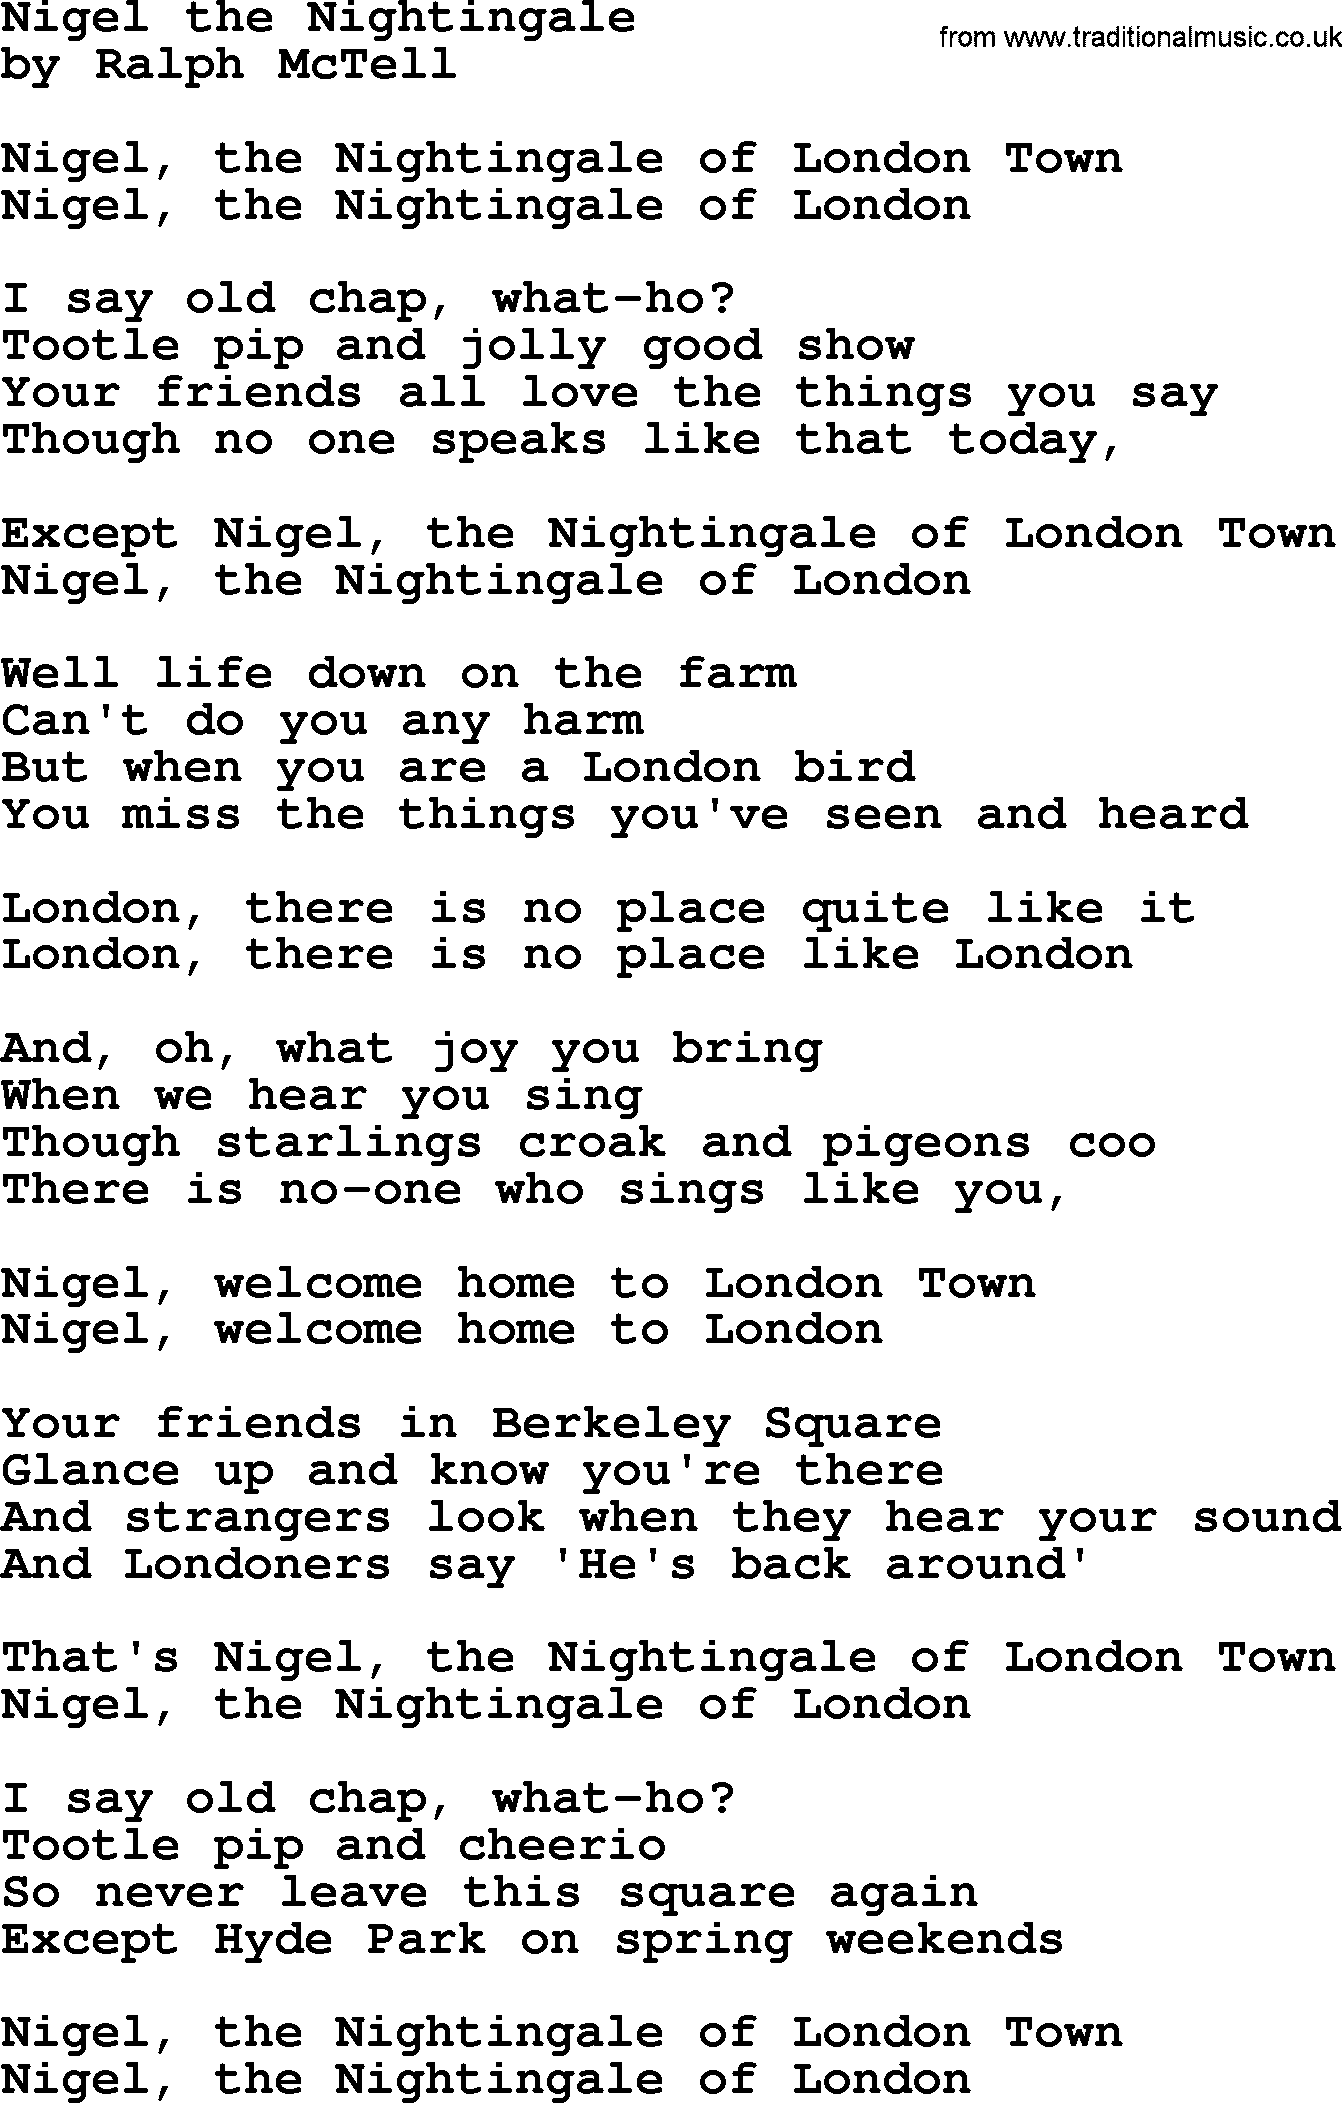 Ralph McTell Song: Nigel The Nightingale, lyrics